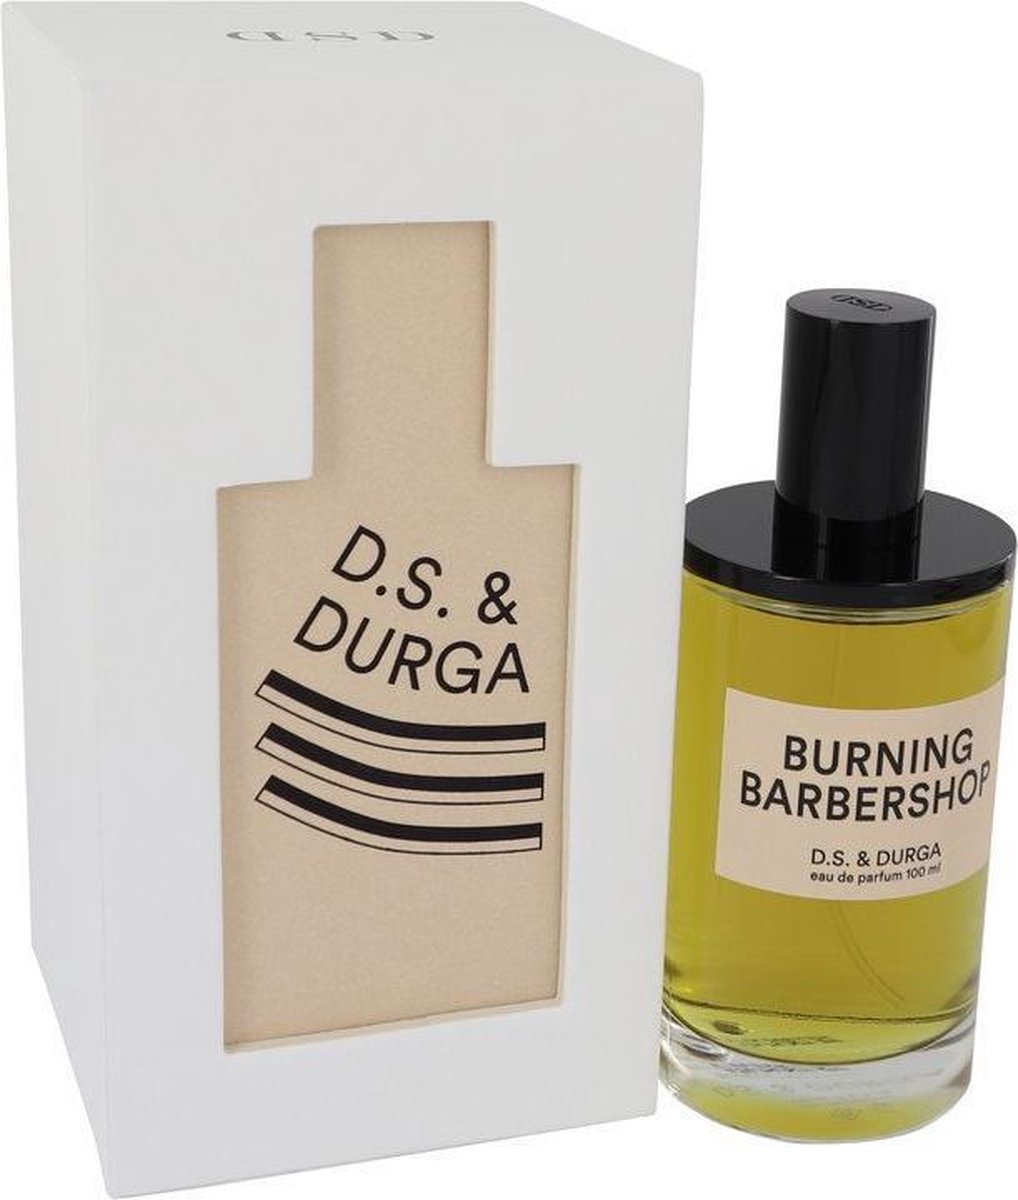 Burning Barbershop by D.S. & Durga 100 ml - Eau De Parfum Spray